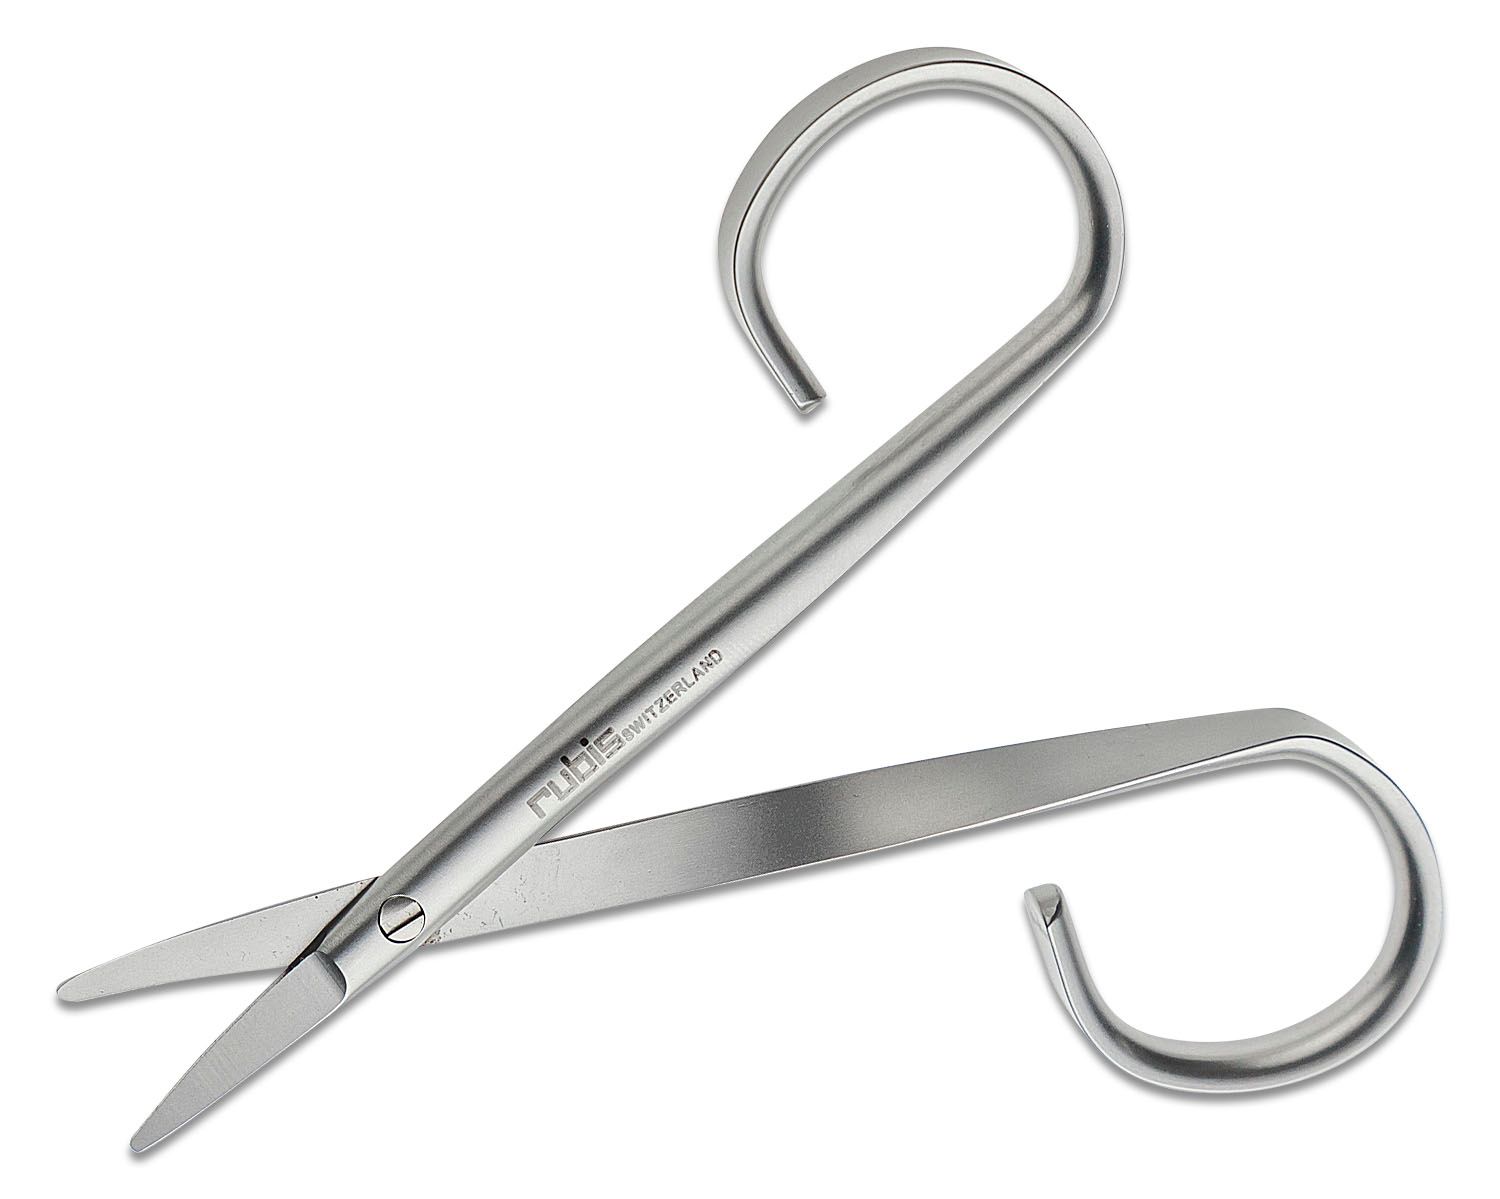 Rubis Scissors Baby Nail (Safety / Child)